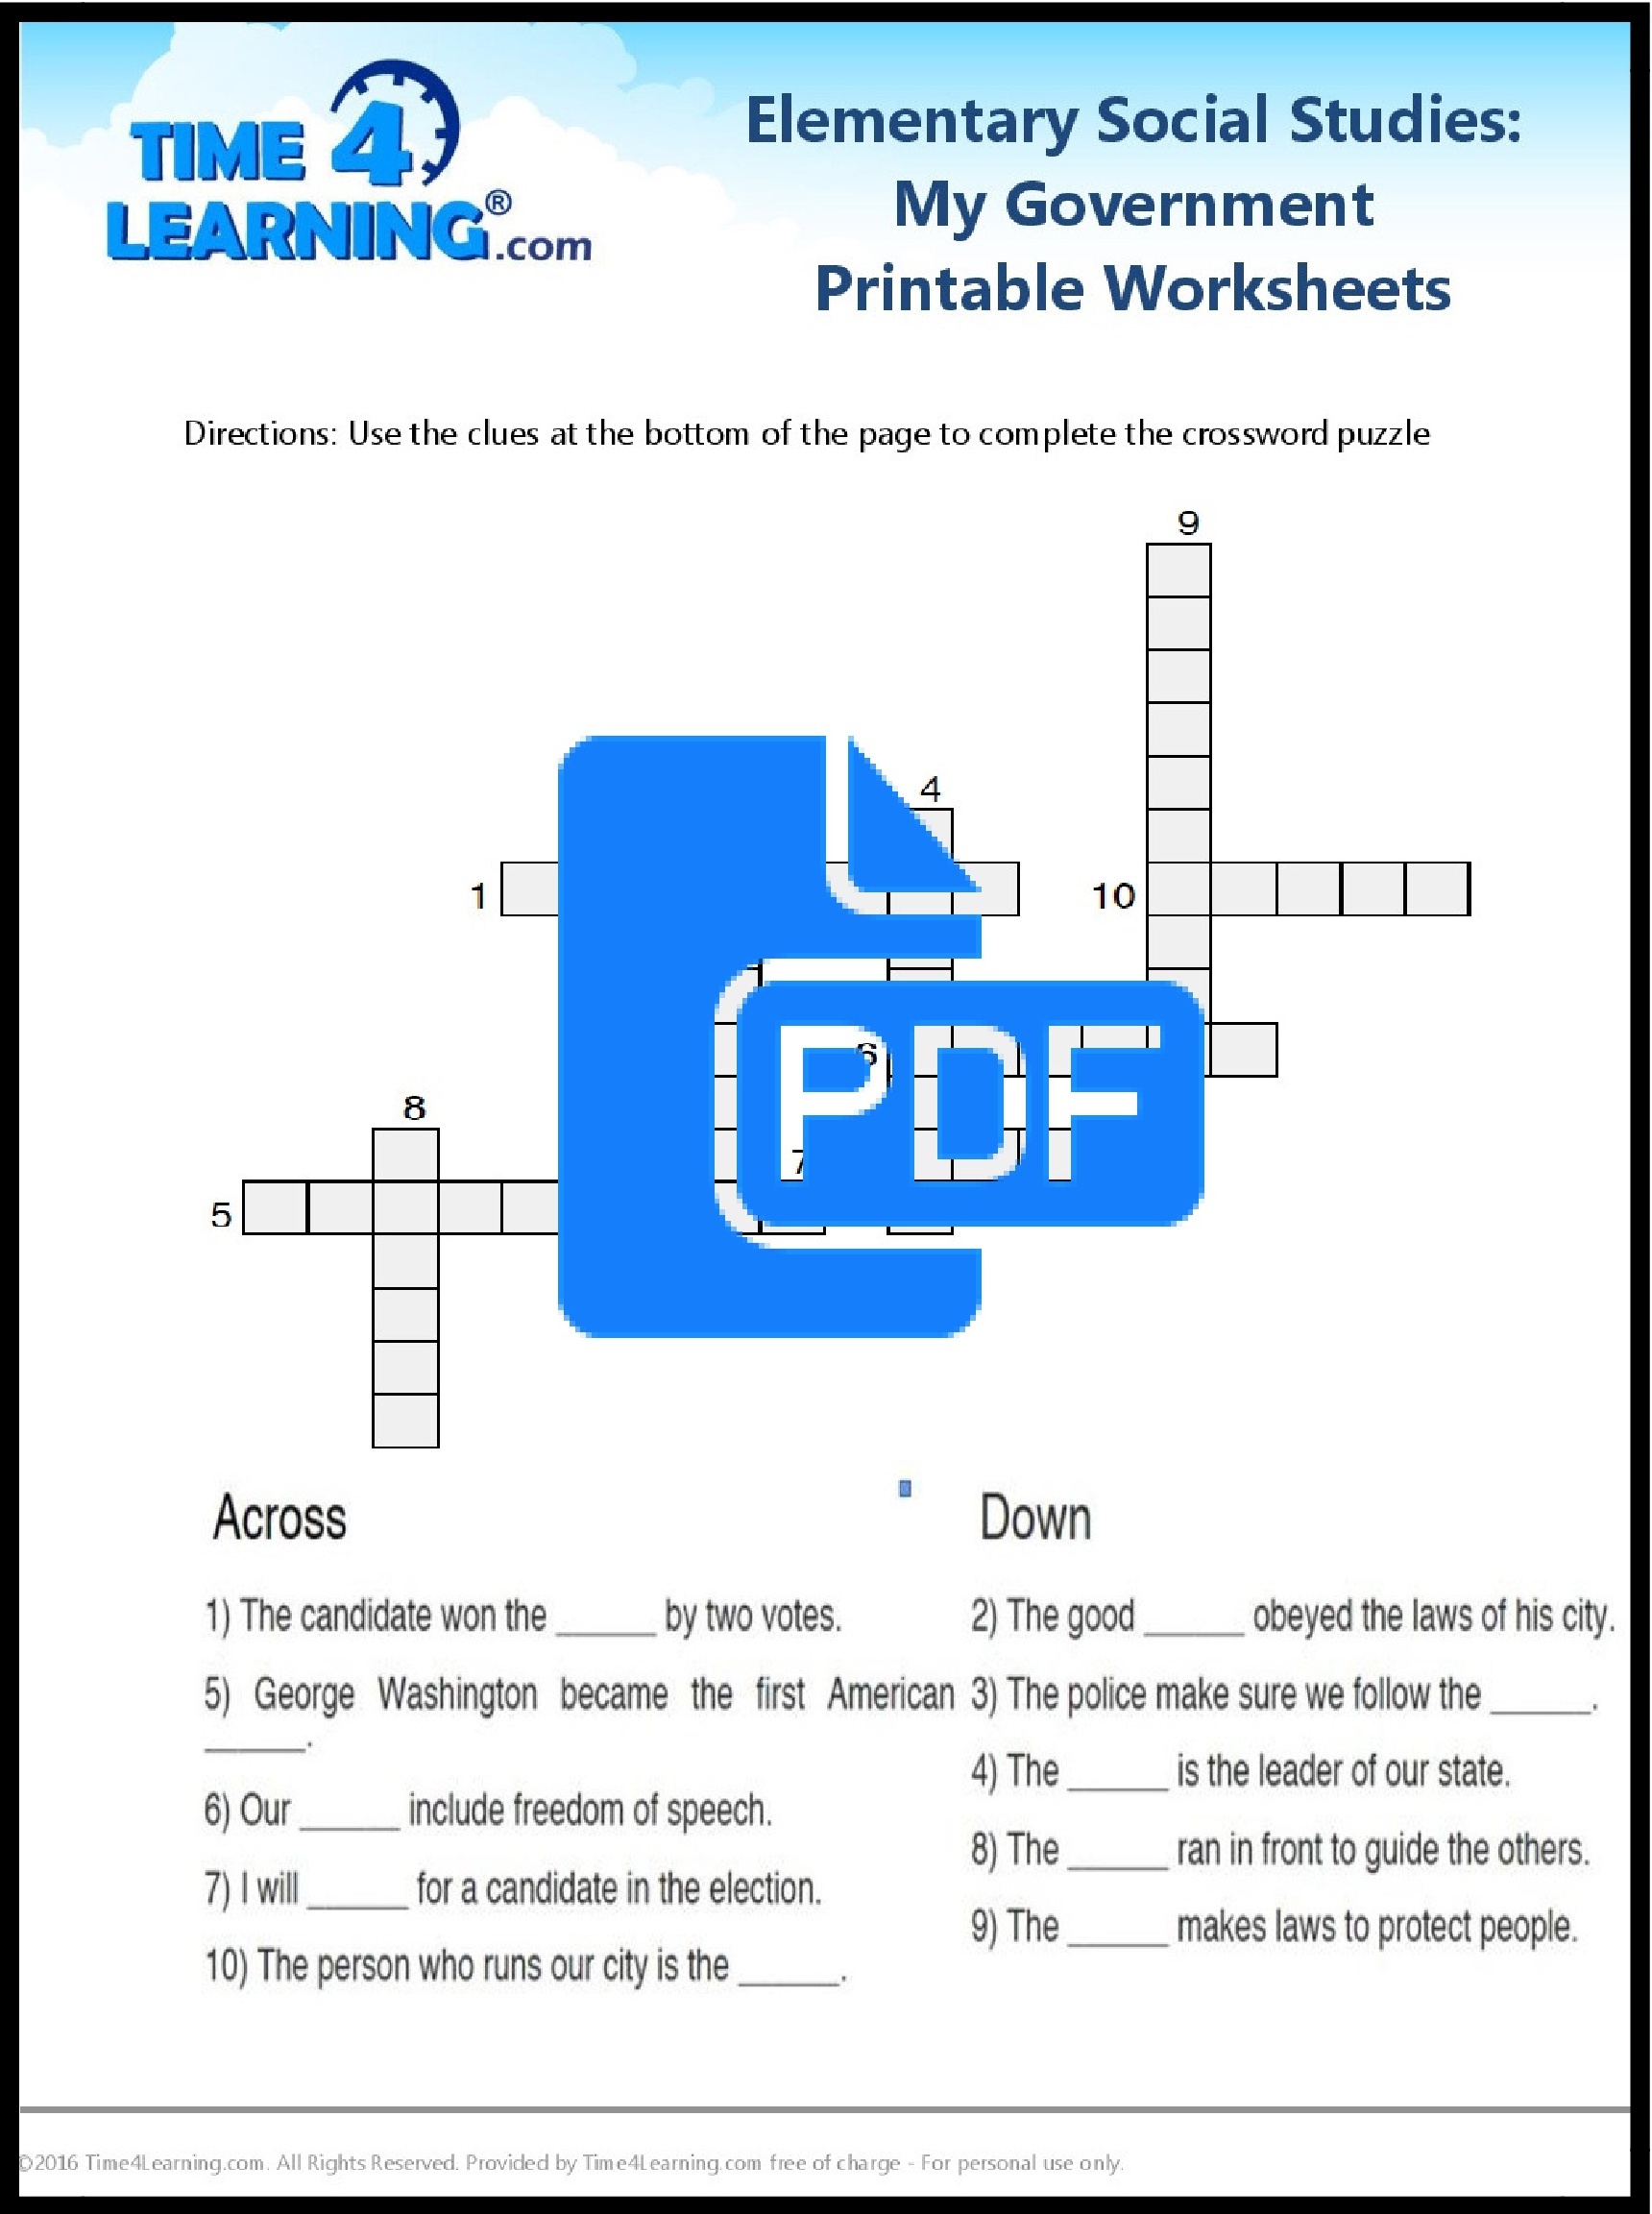 Free Printable: Elementary Social Studies Worksheet | Time4Learning - Social Studies Worksheets First Grade Free Printable